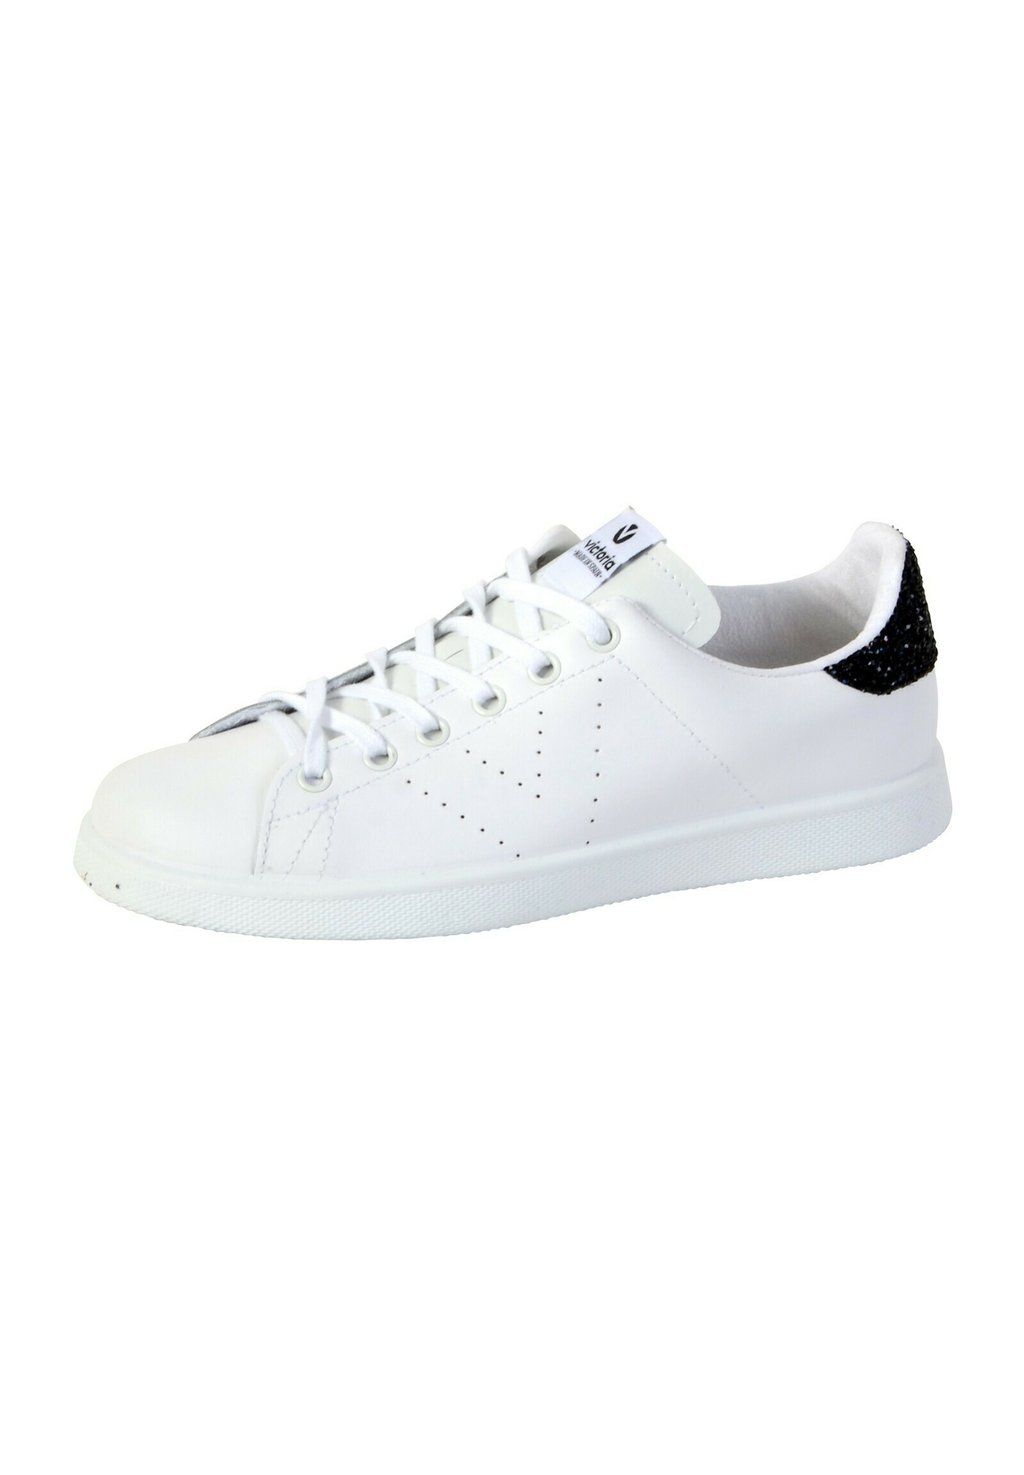 Кроссовки BASKET VICTORIA Victoria Shoes, белый кроссовки victoria shoes basket lona plataforma blanco